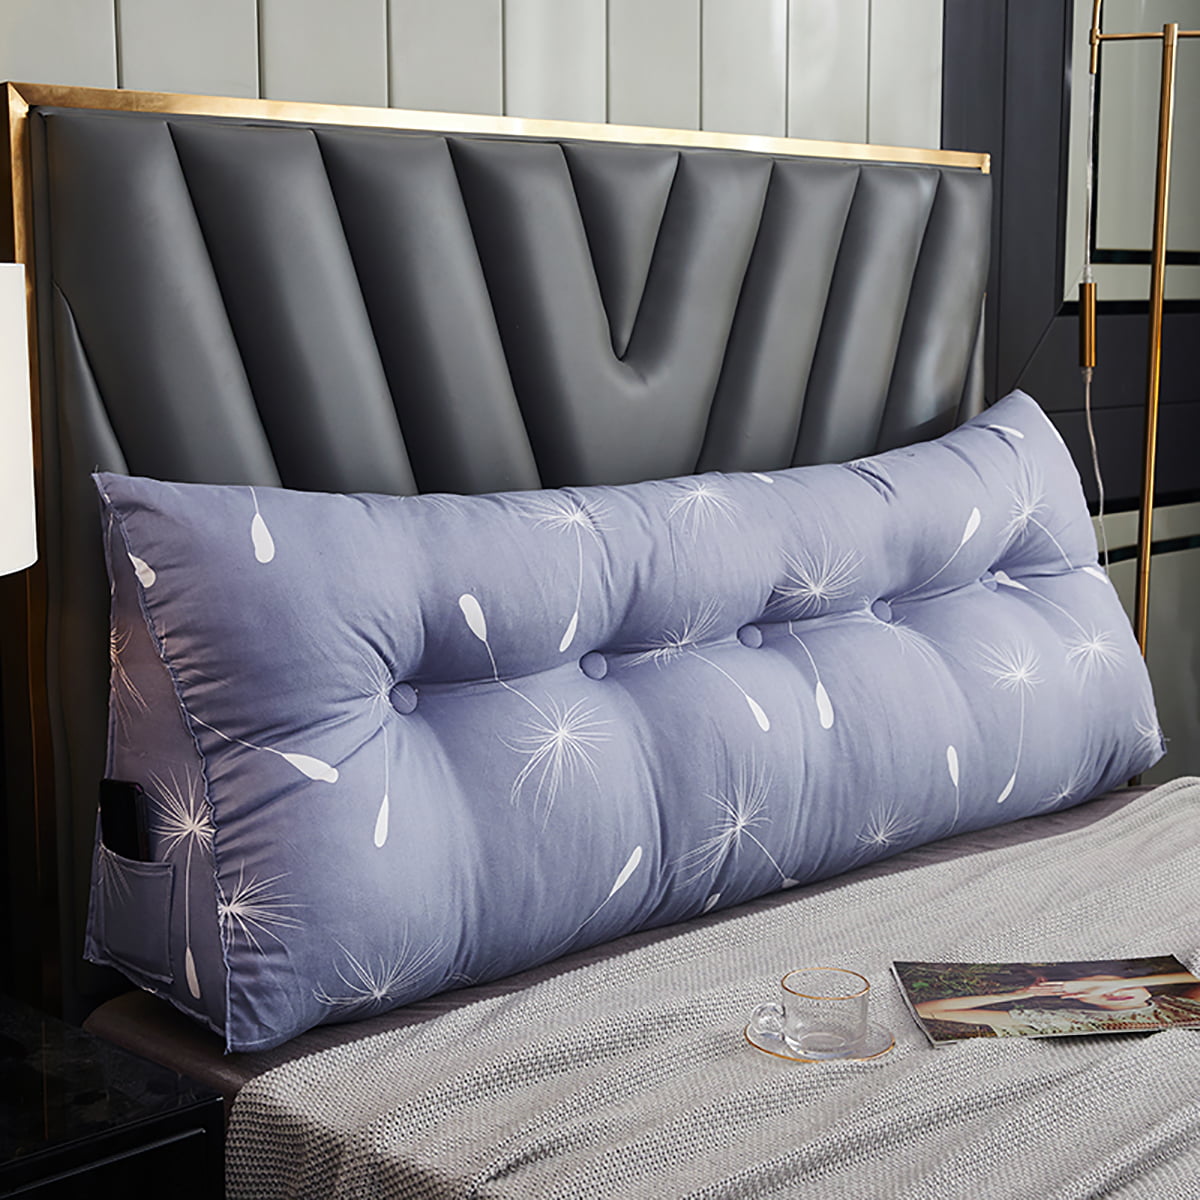 DANODAN Big Bed Backrest Pillow Support Pillow for Relaxing Watching Tv Bed,Bolster Upholstered Headboard Filled,Triangular Reading Wedge Pillow Bao Blue 602550cm